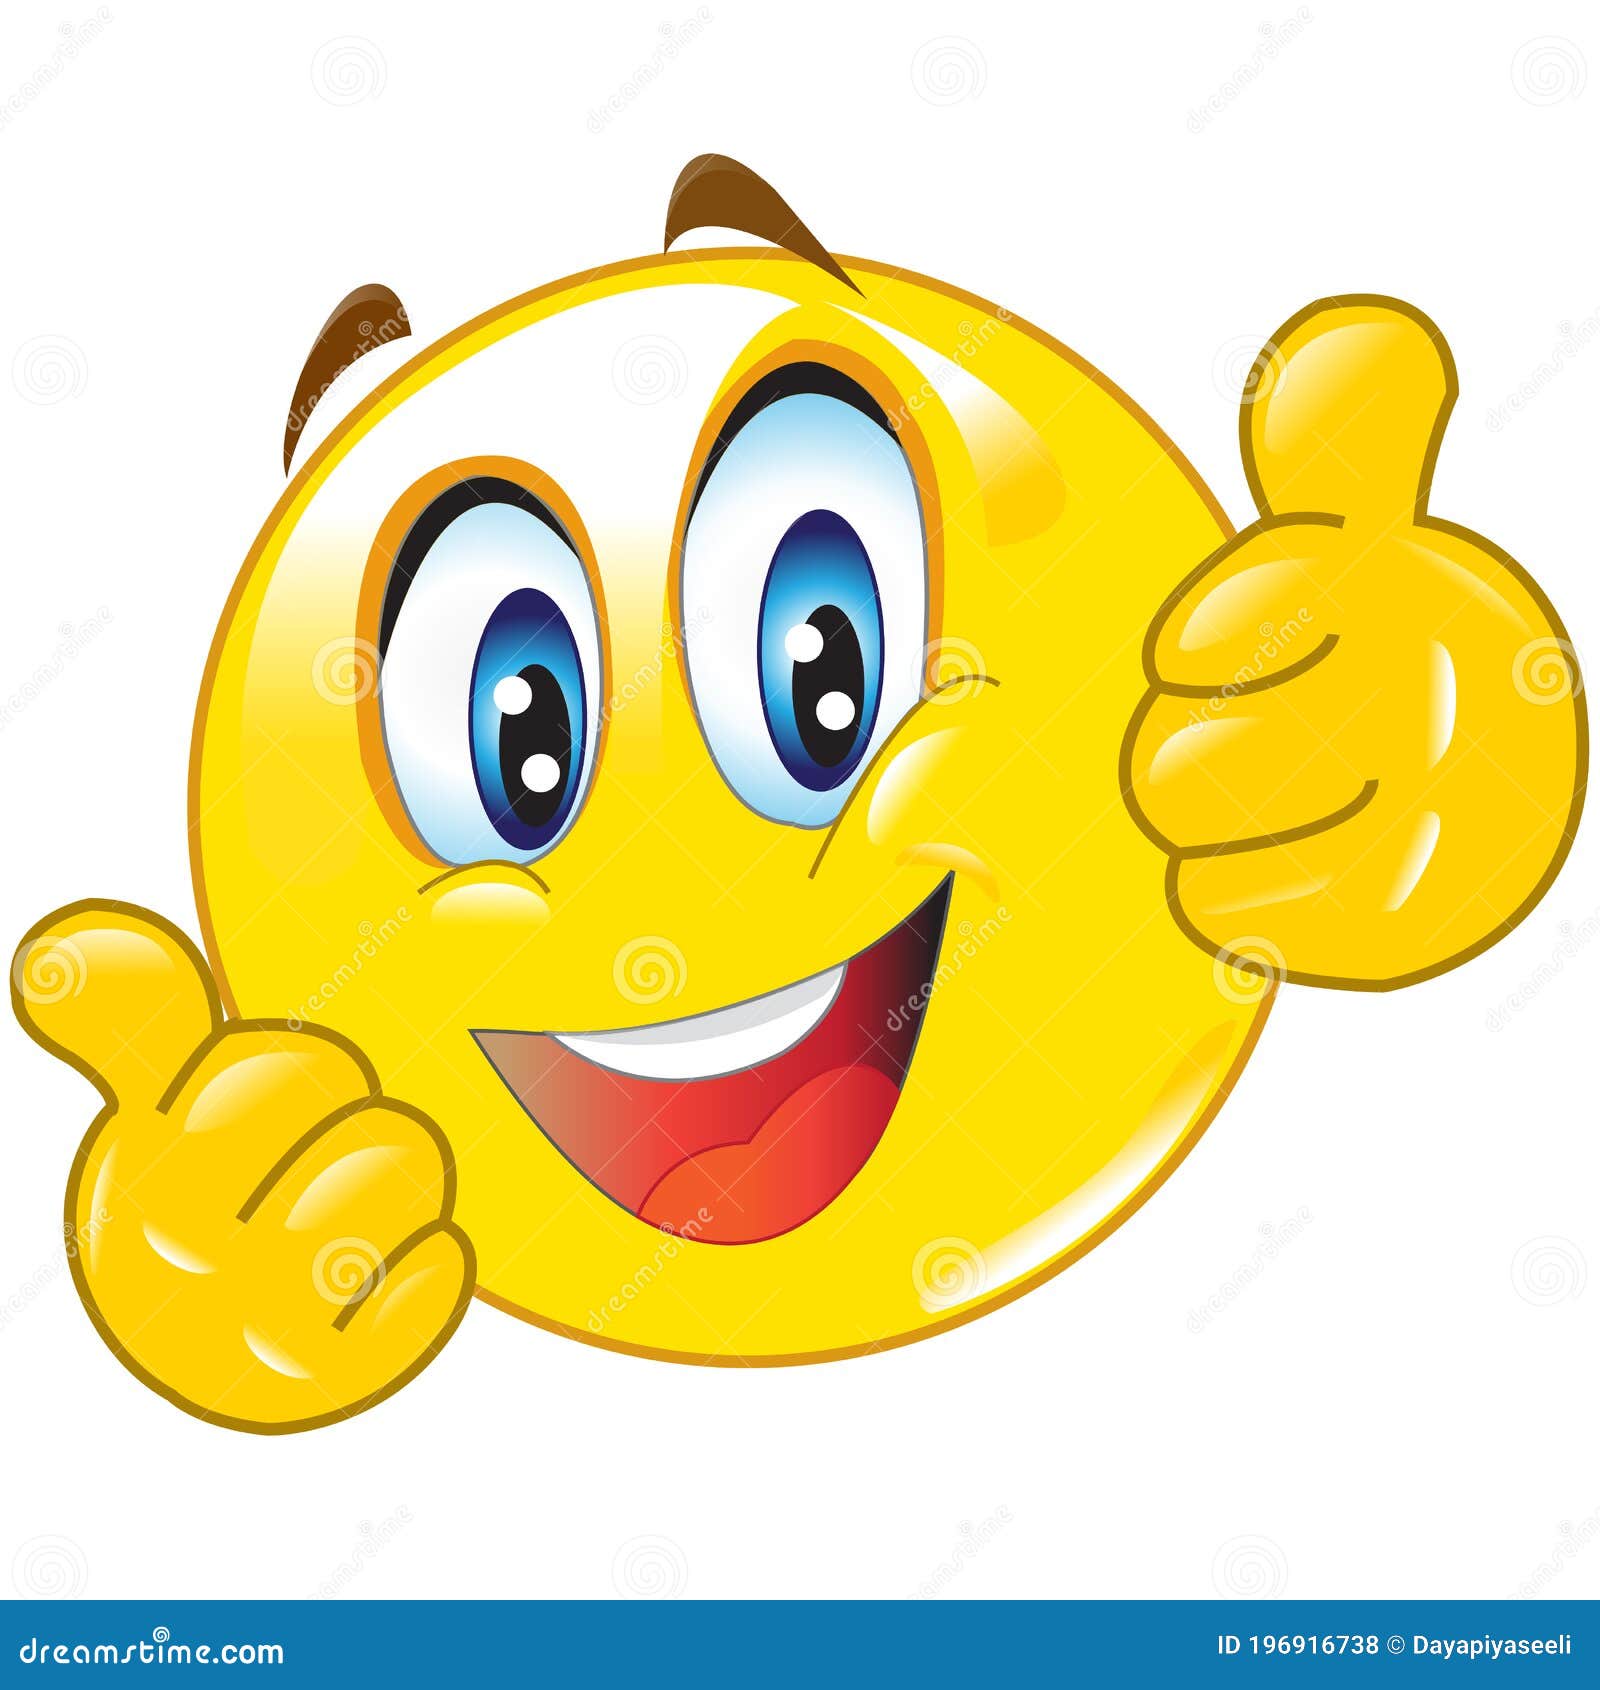 Thumbs Up Emoji Smiley Cartoon Vector | CartoonDealer.com #65807201